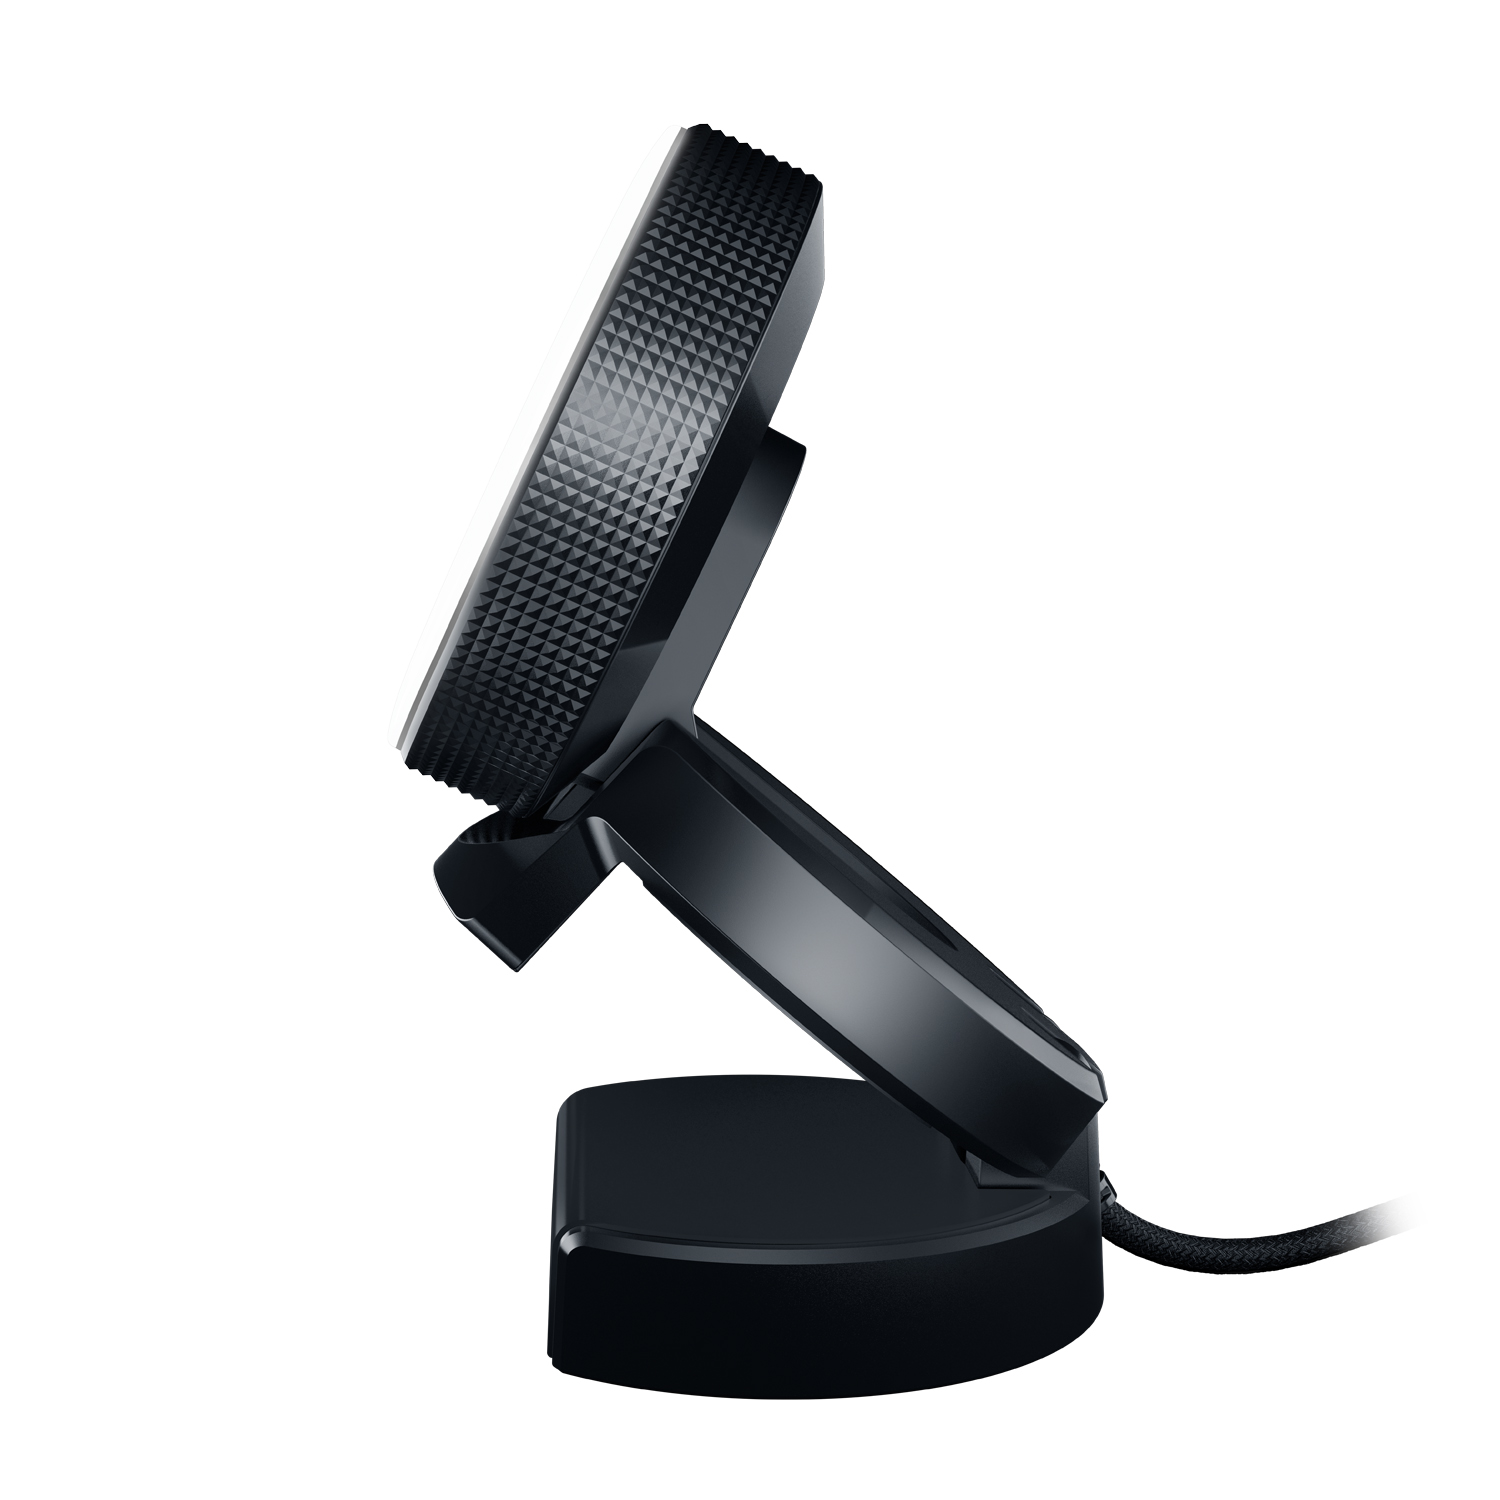 Razer Kiyo Streaming Webcam, Full HD, Auto Focus, Ring Light with Adjustable Brightness, Black - image 7 of 10